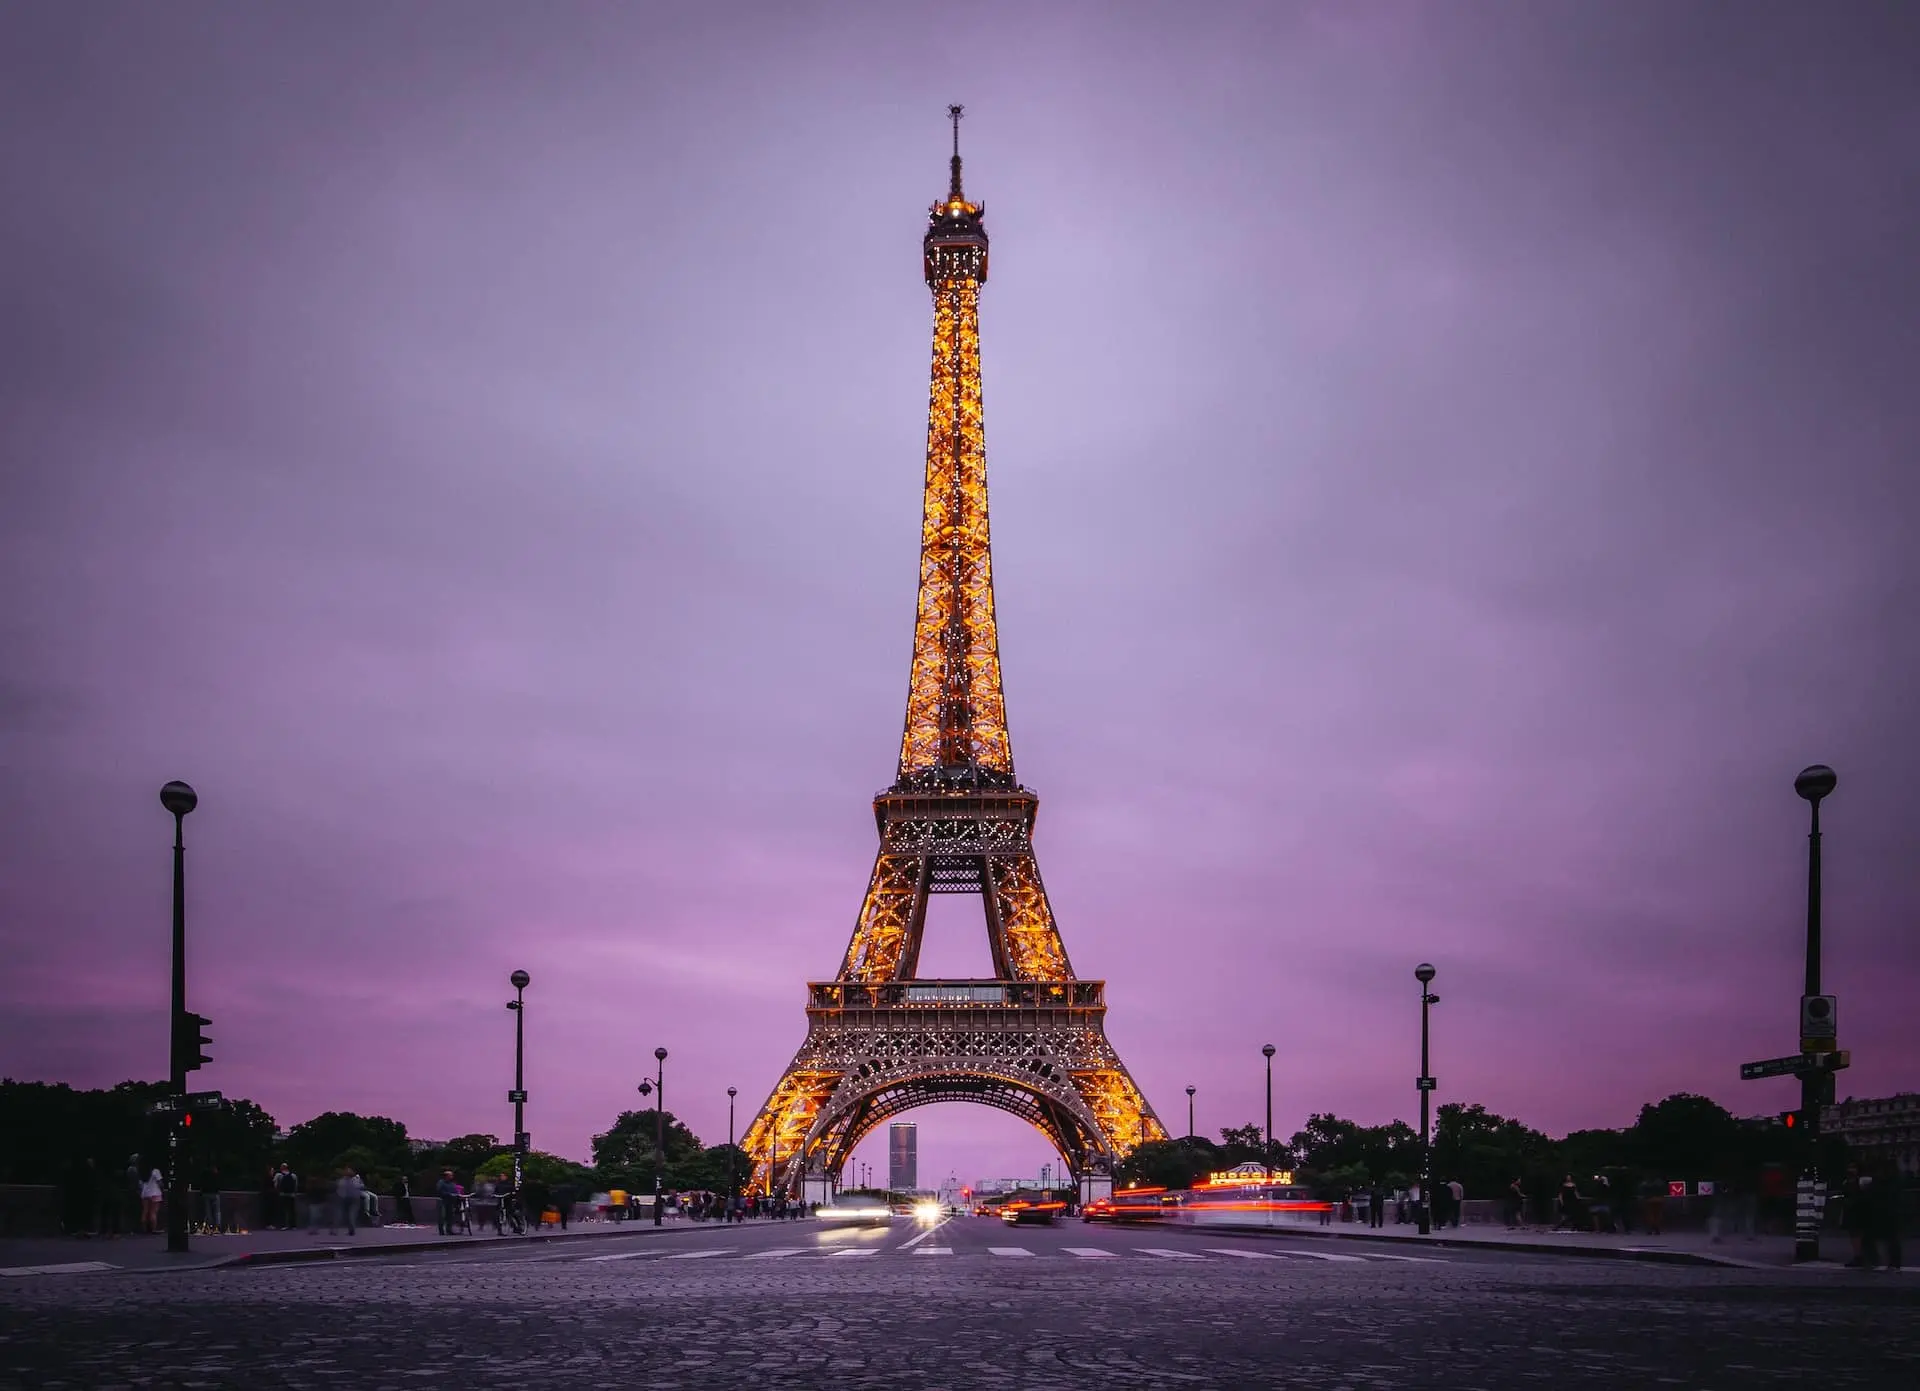 The Eiffel Tower illuminated at dusk.